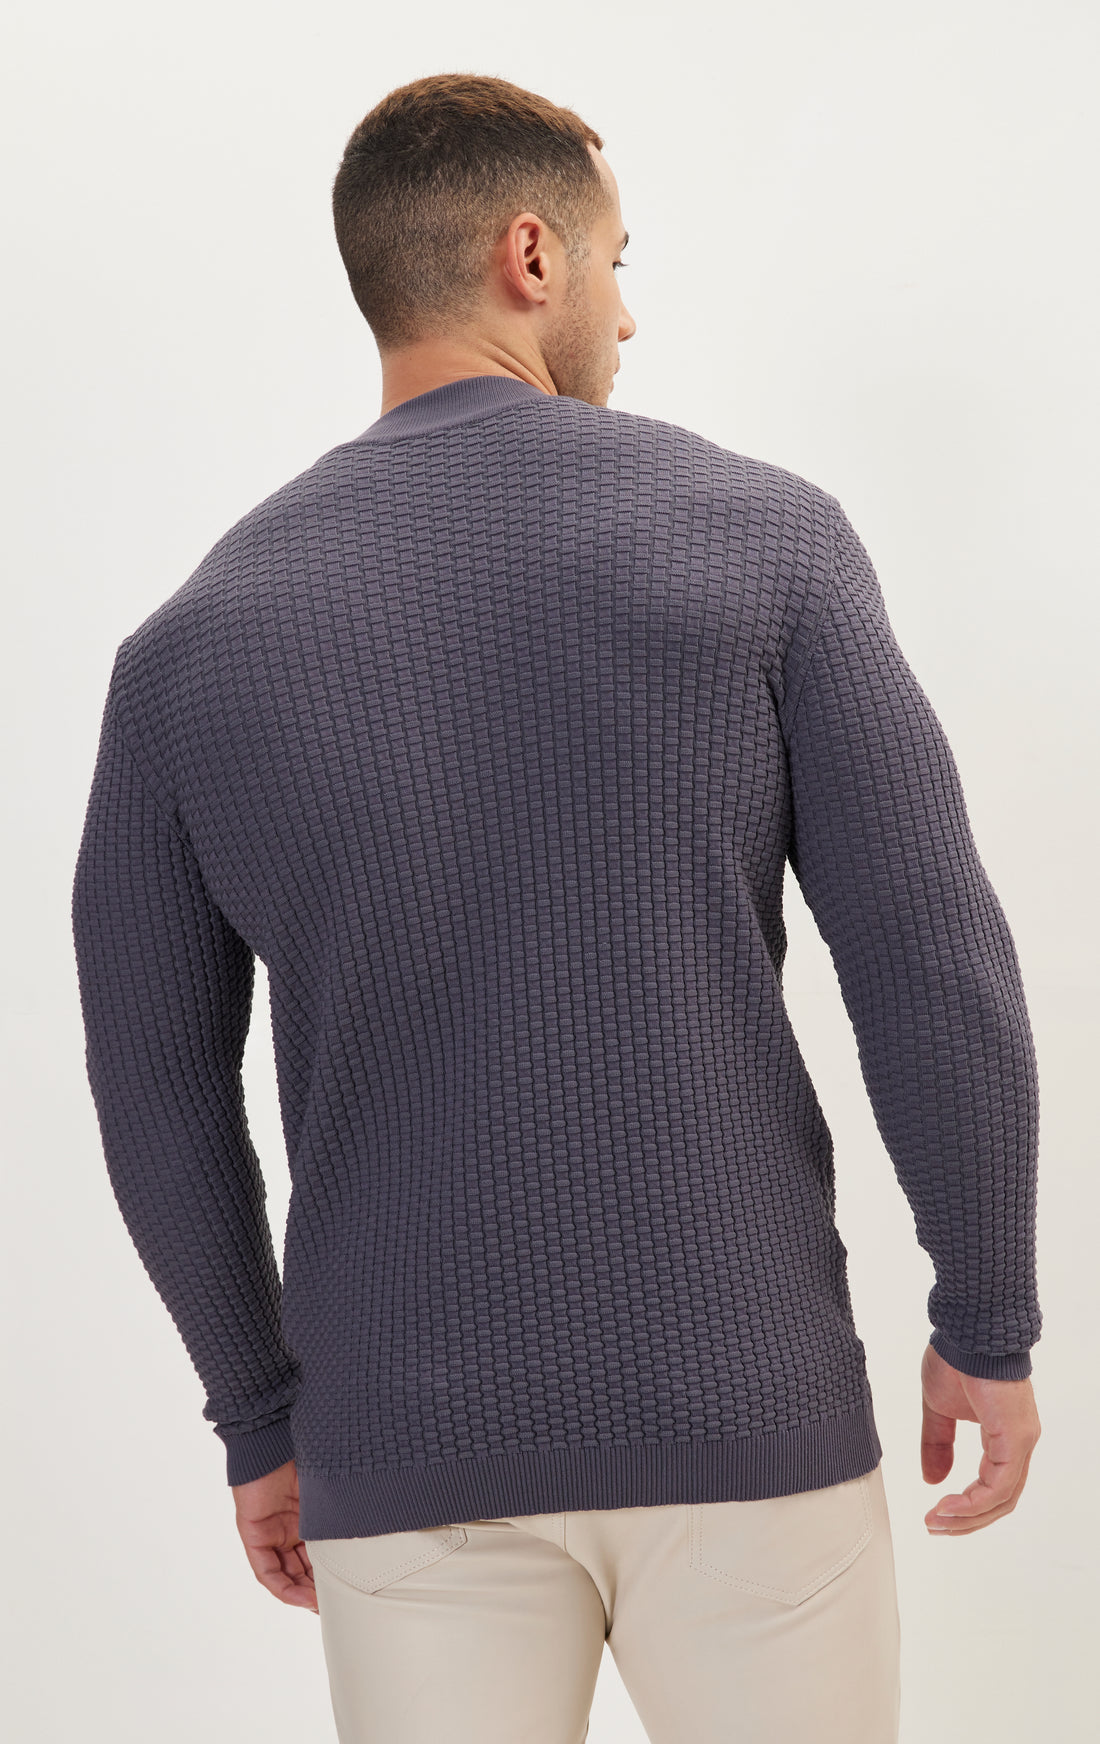 N° 6461 bamboo ribbing stitch mock neck sweater - Anthracite